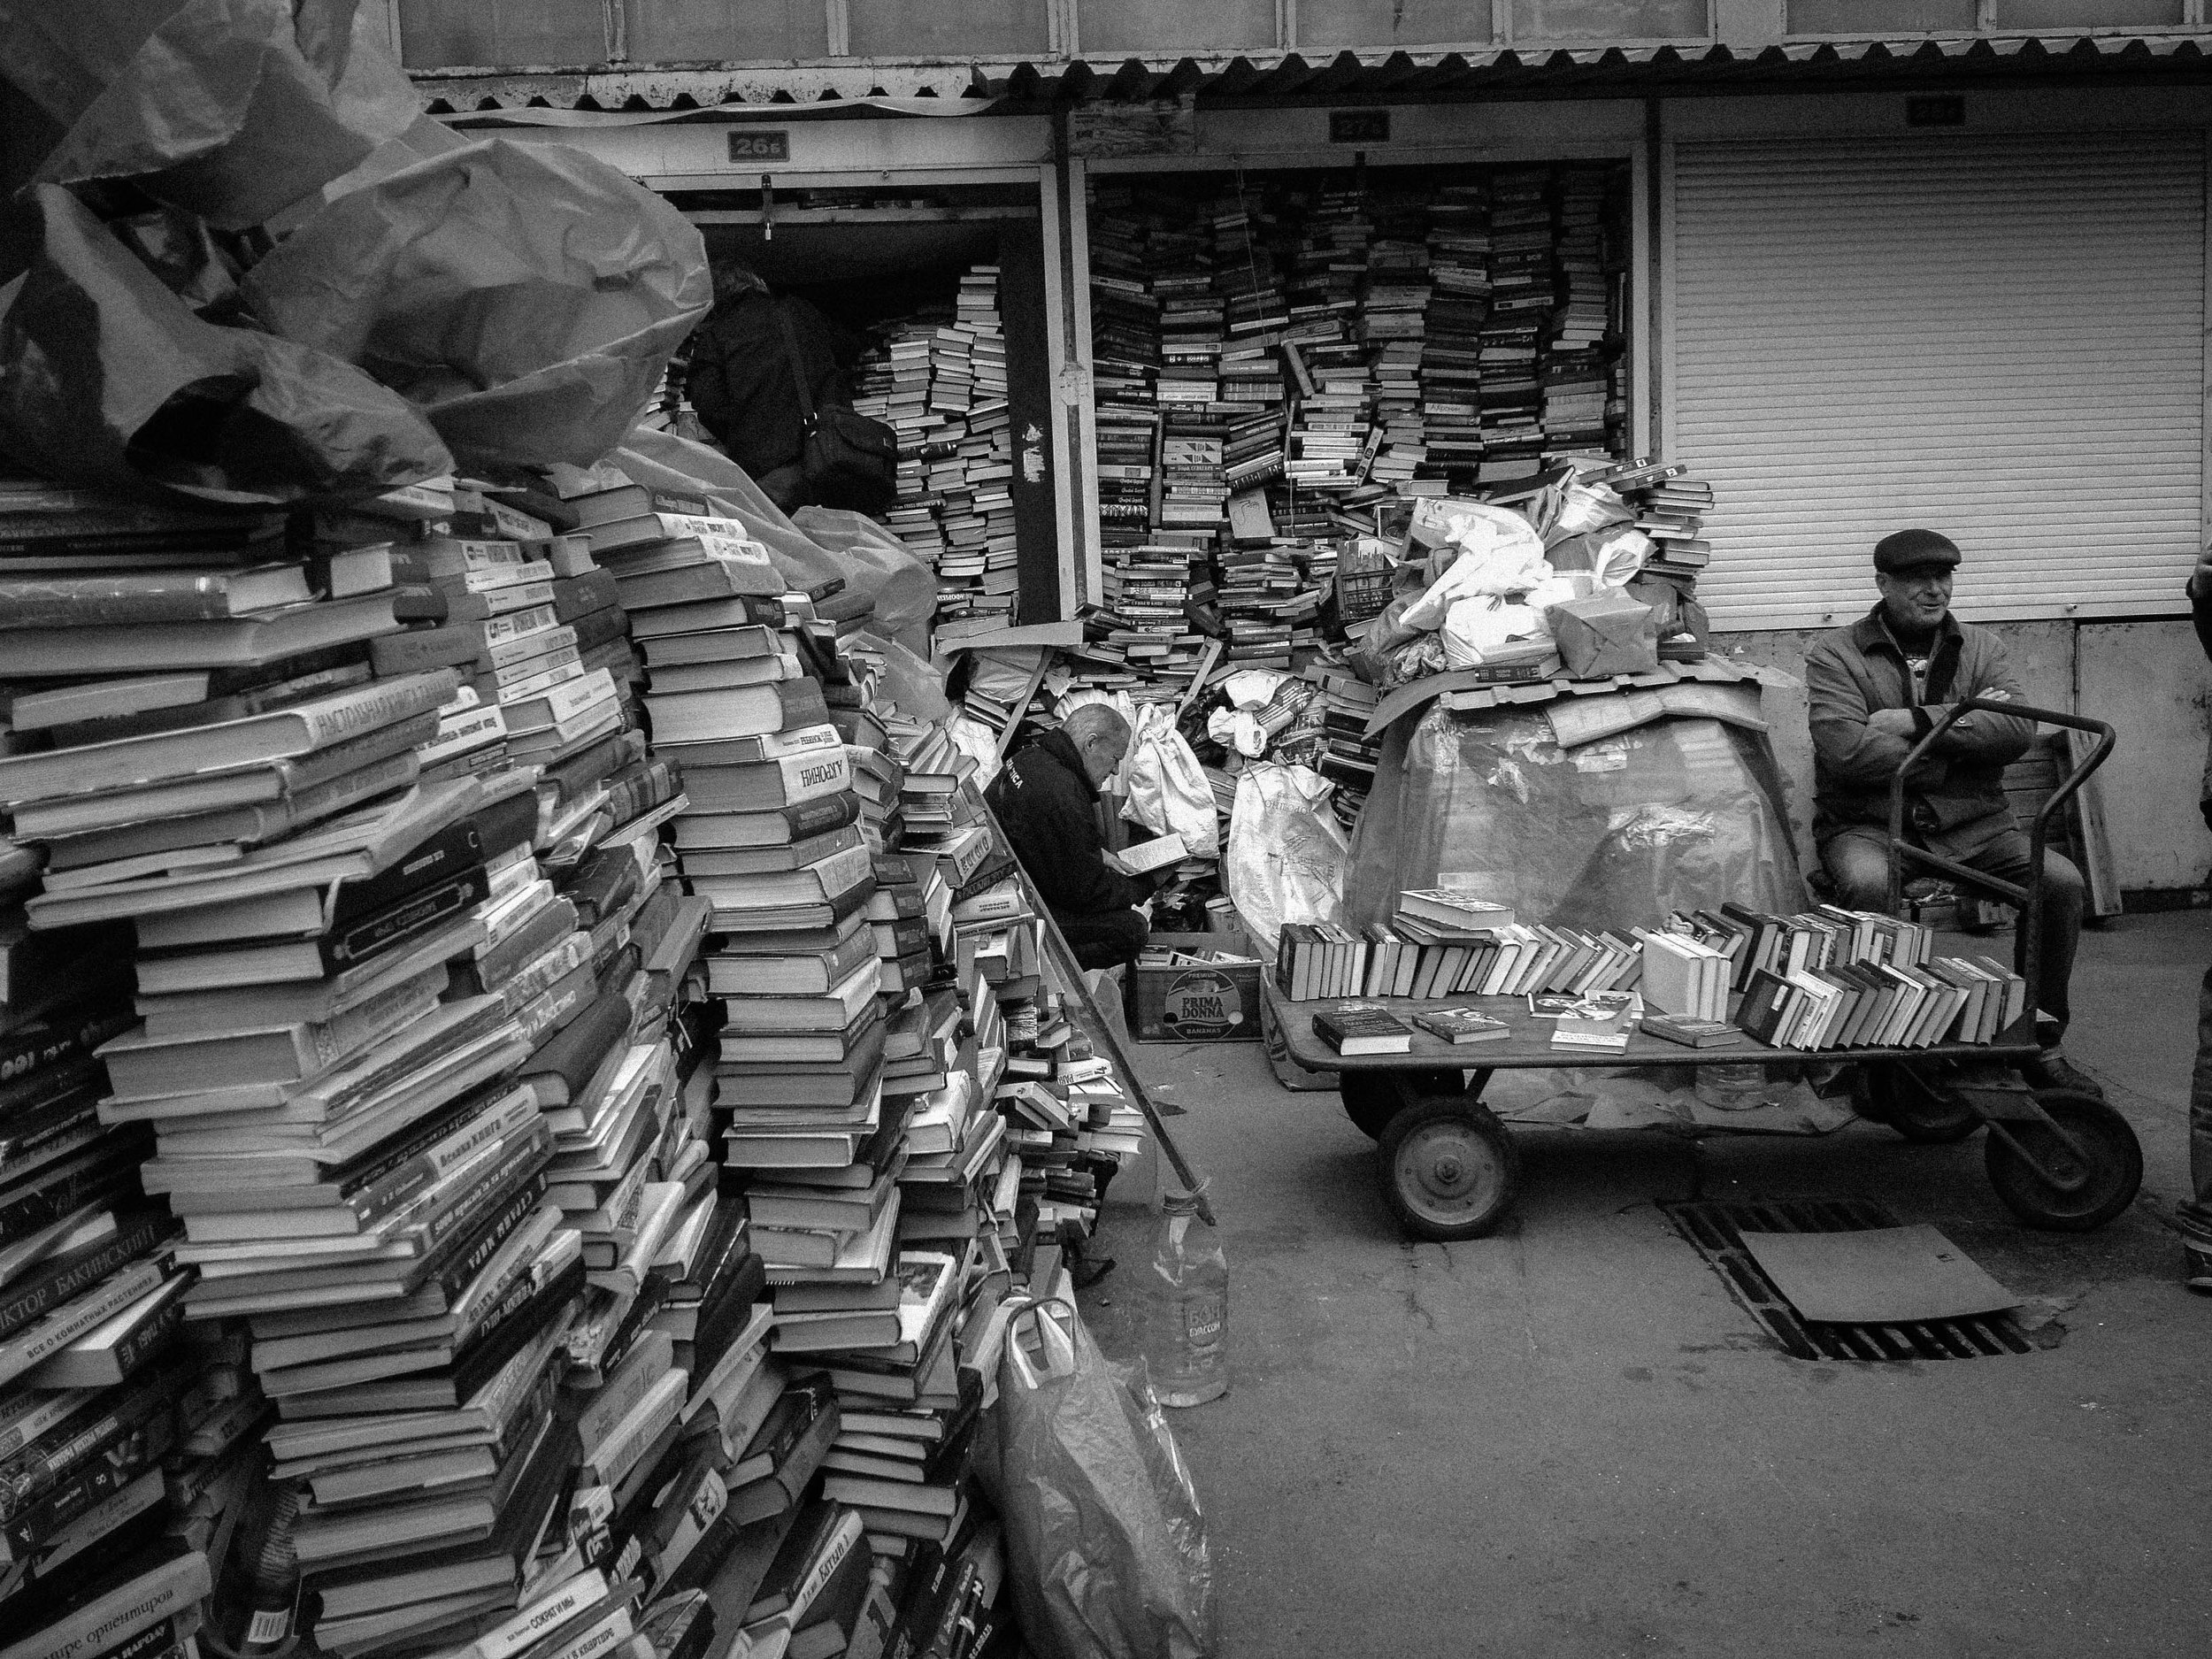 Petrivka book market in Kyiv, Ukraine